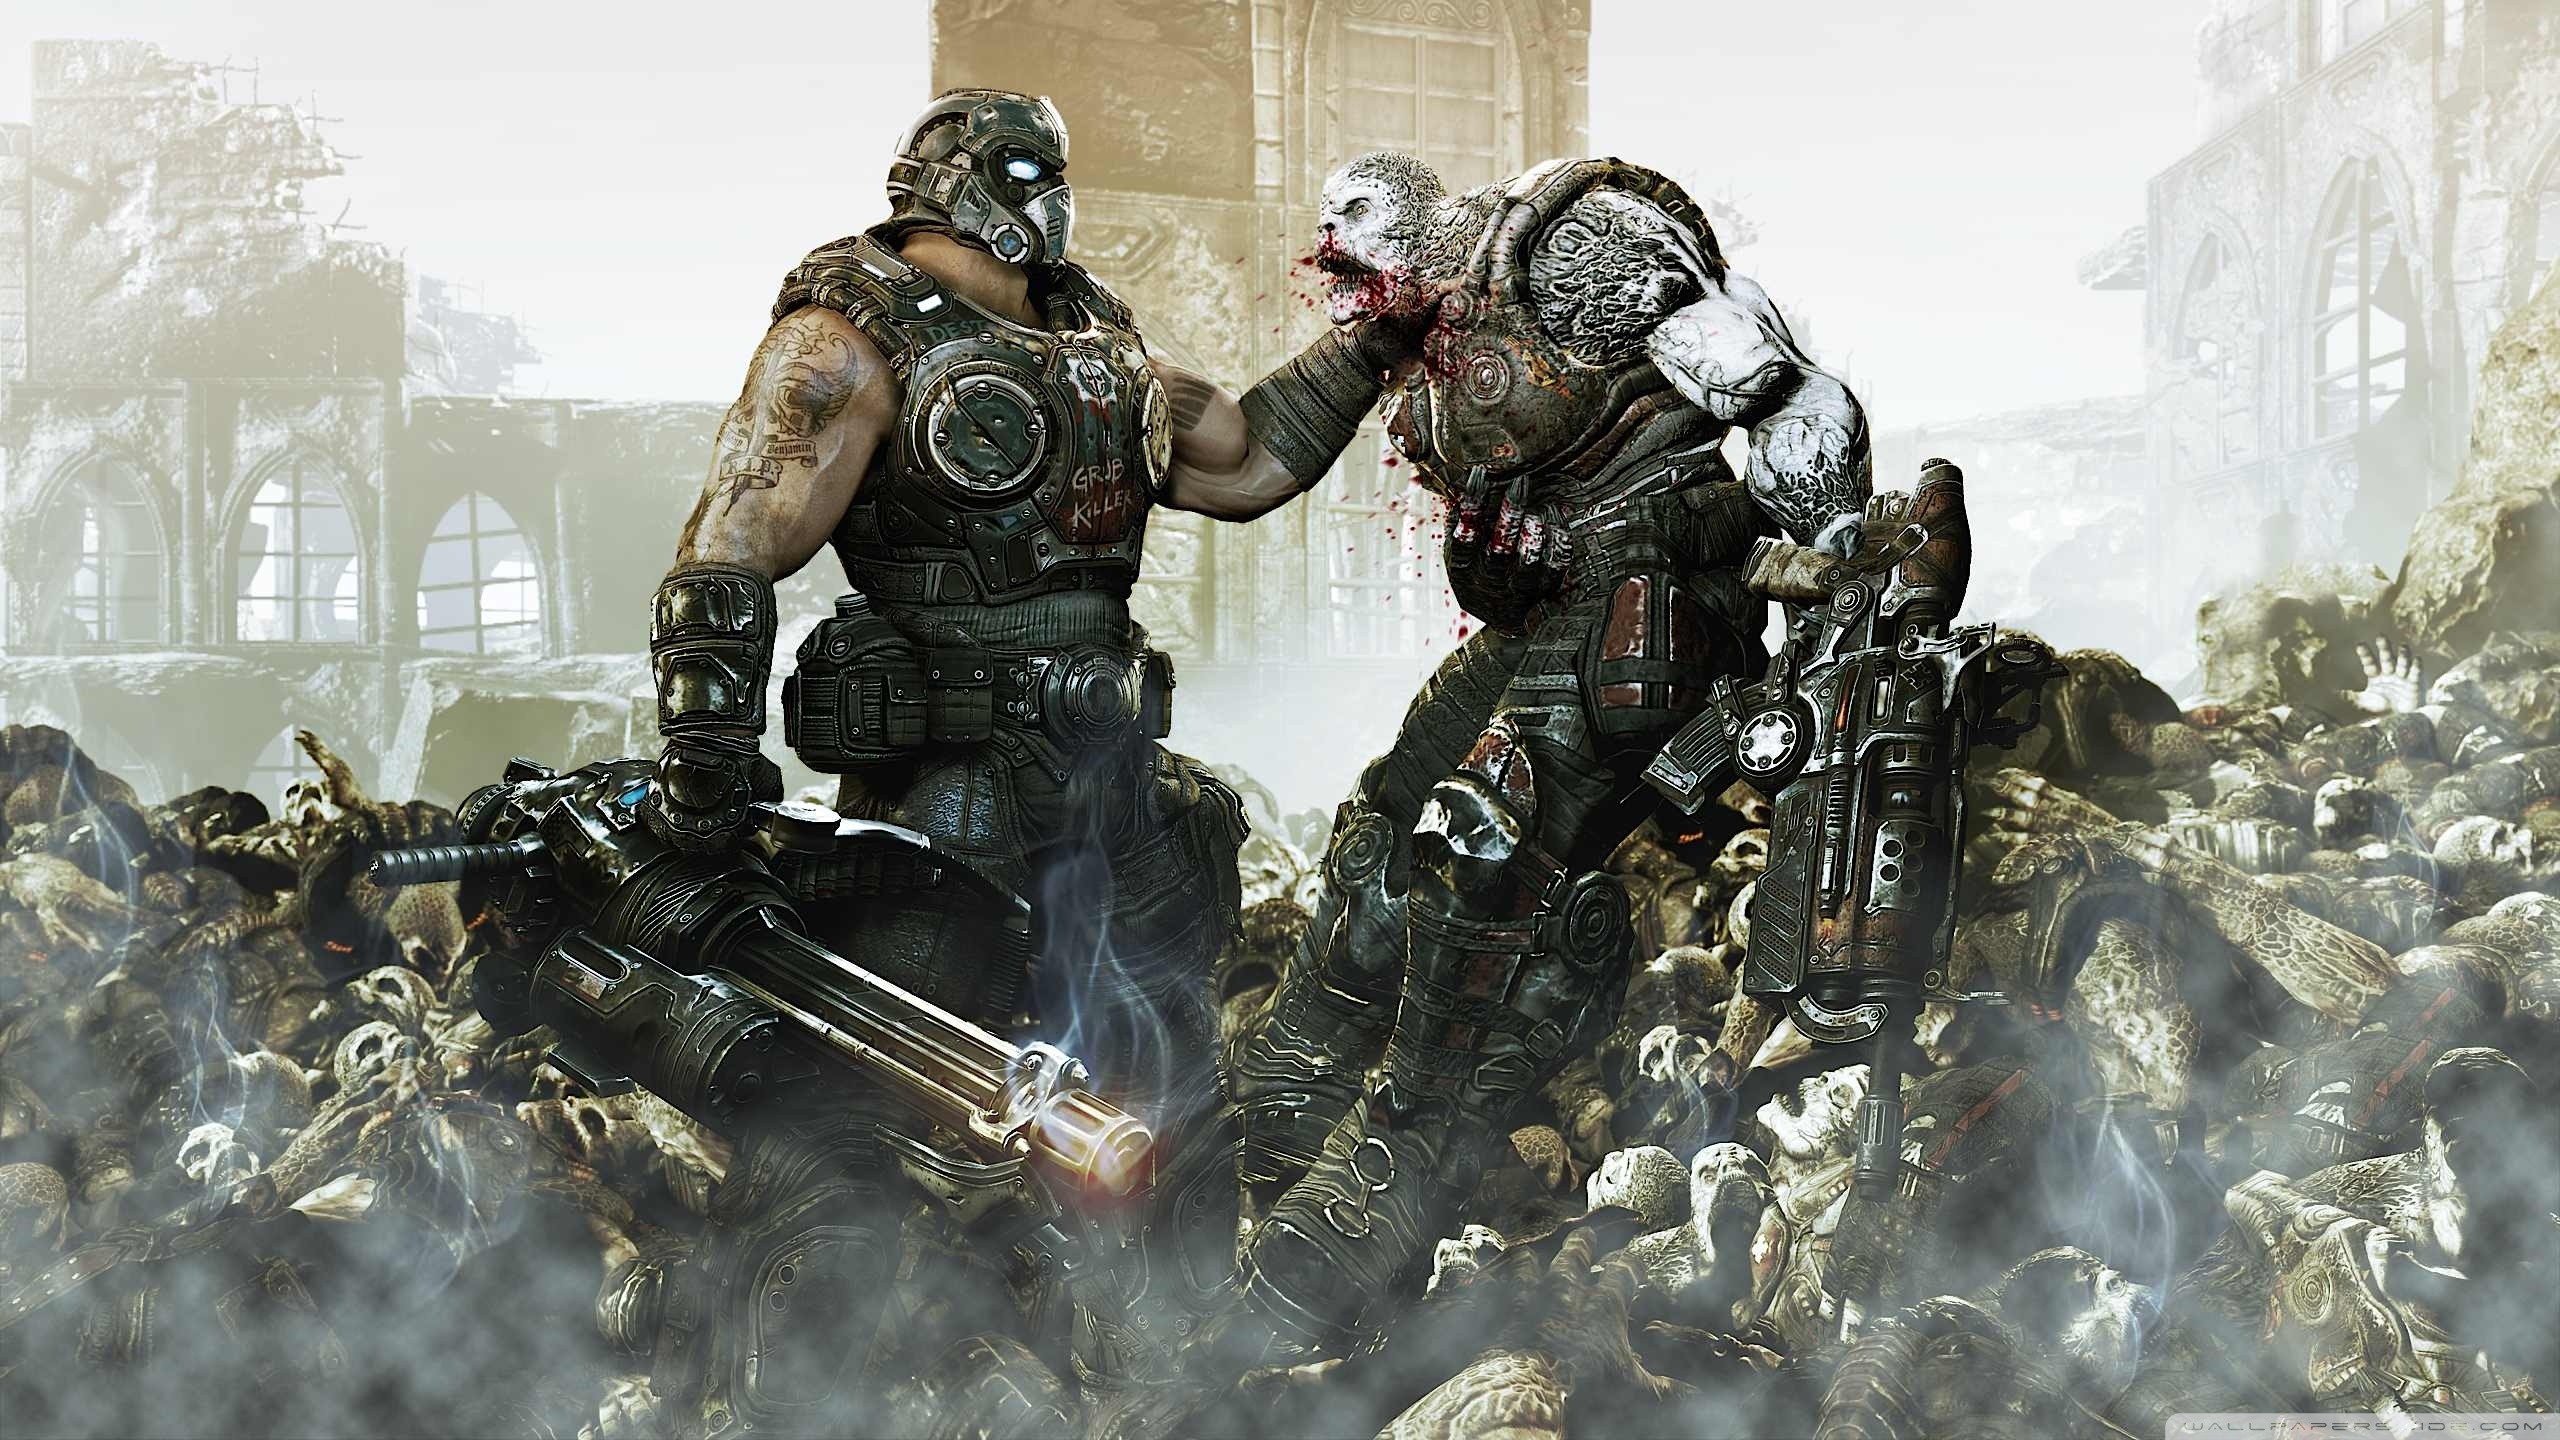 General 2560x1440 Gears of War video games Gears of War 3 Epic Games Xbox Game Studios